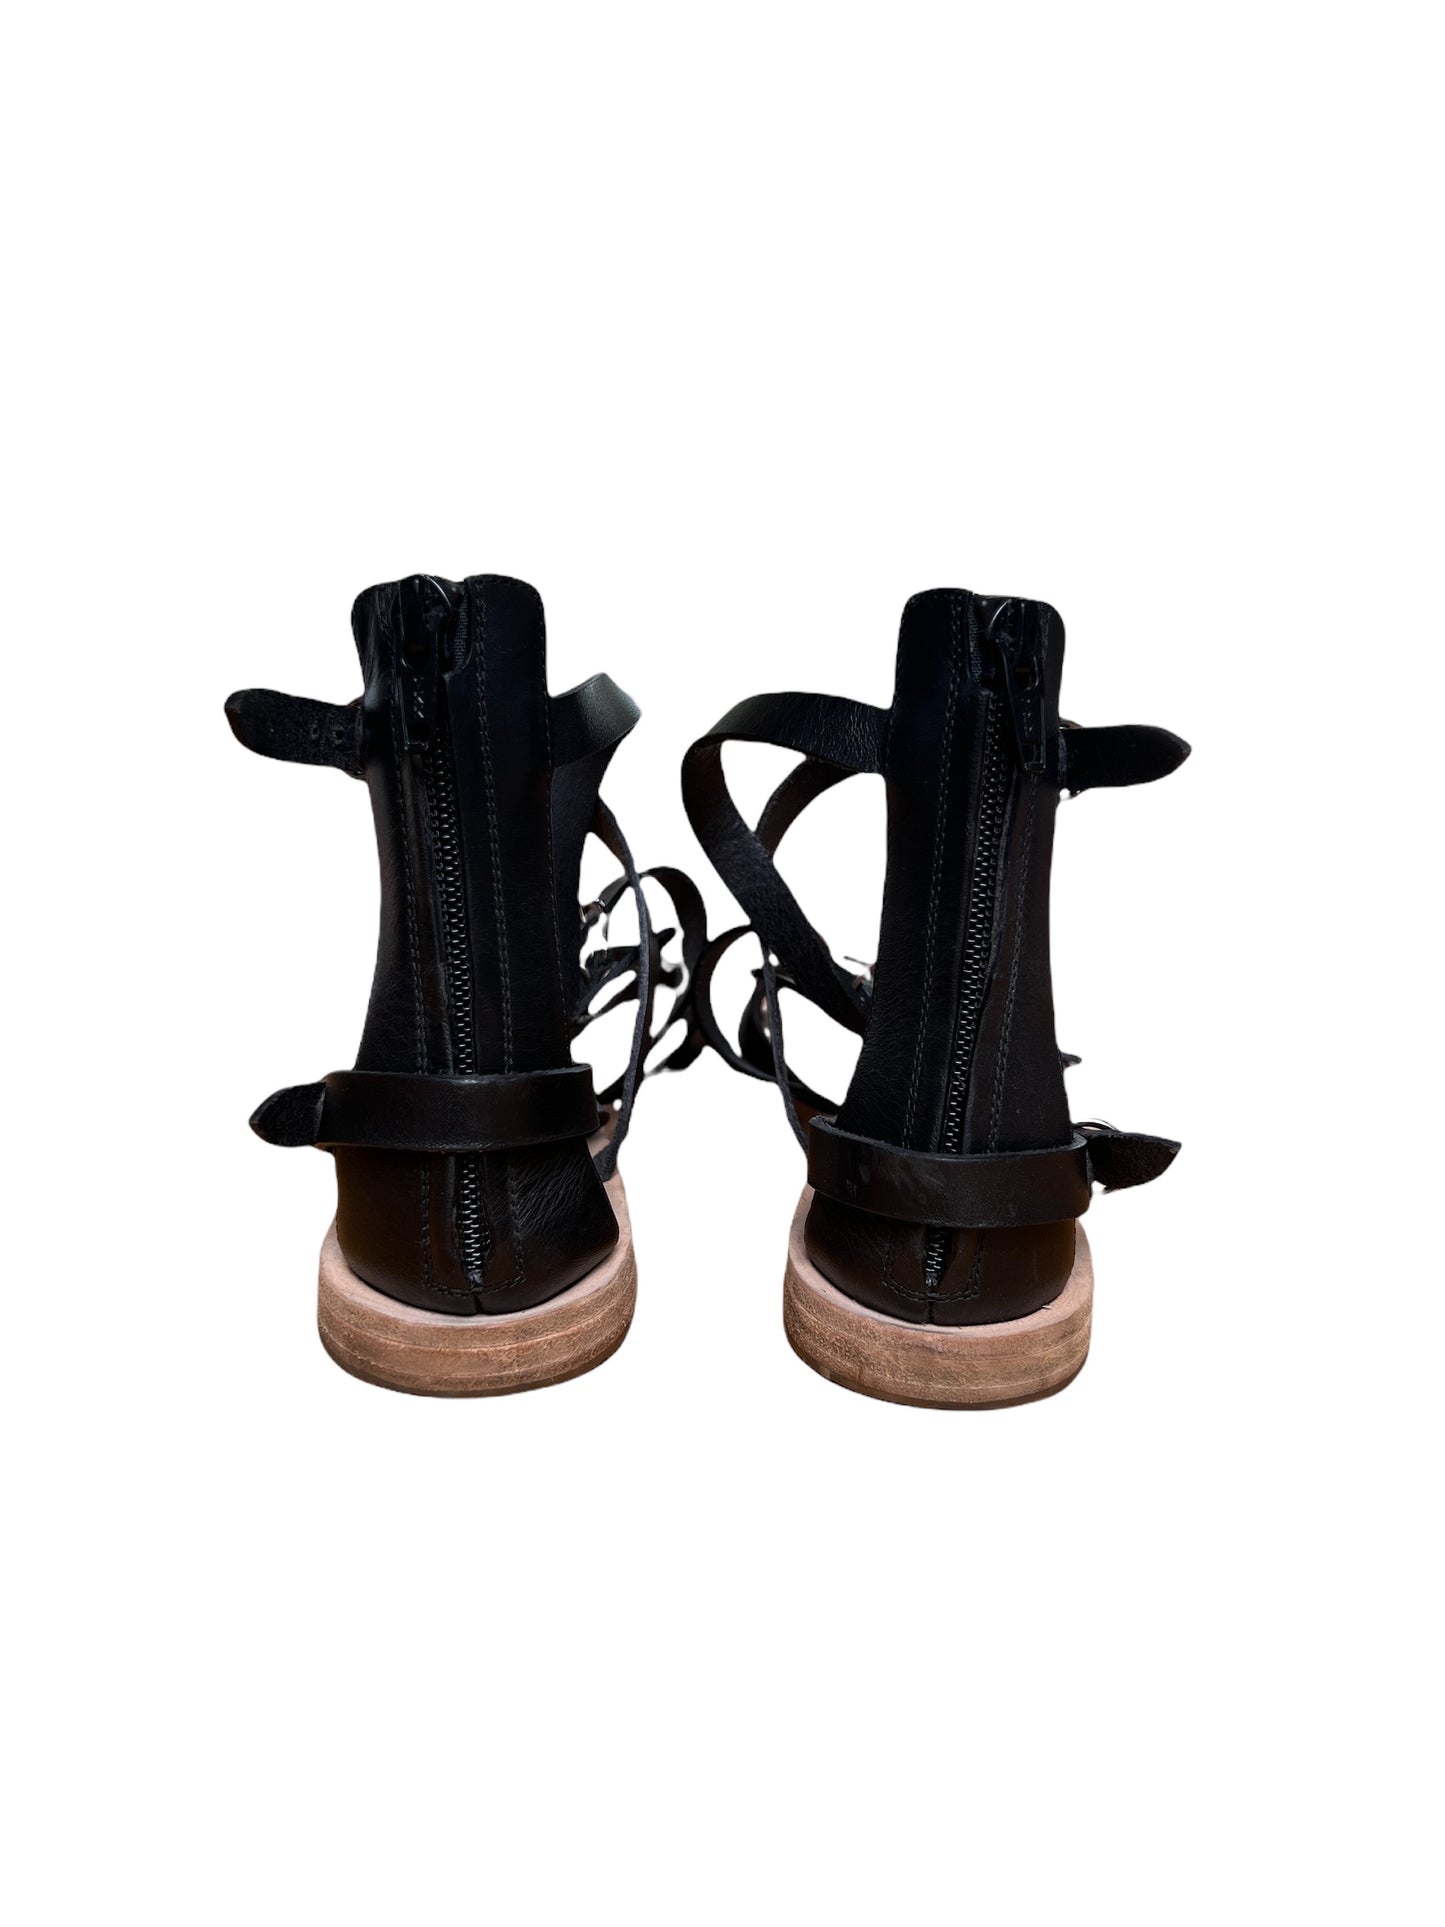 Black Gladiator Sandals - 6.5